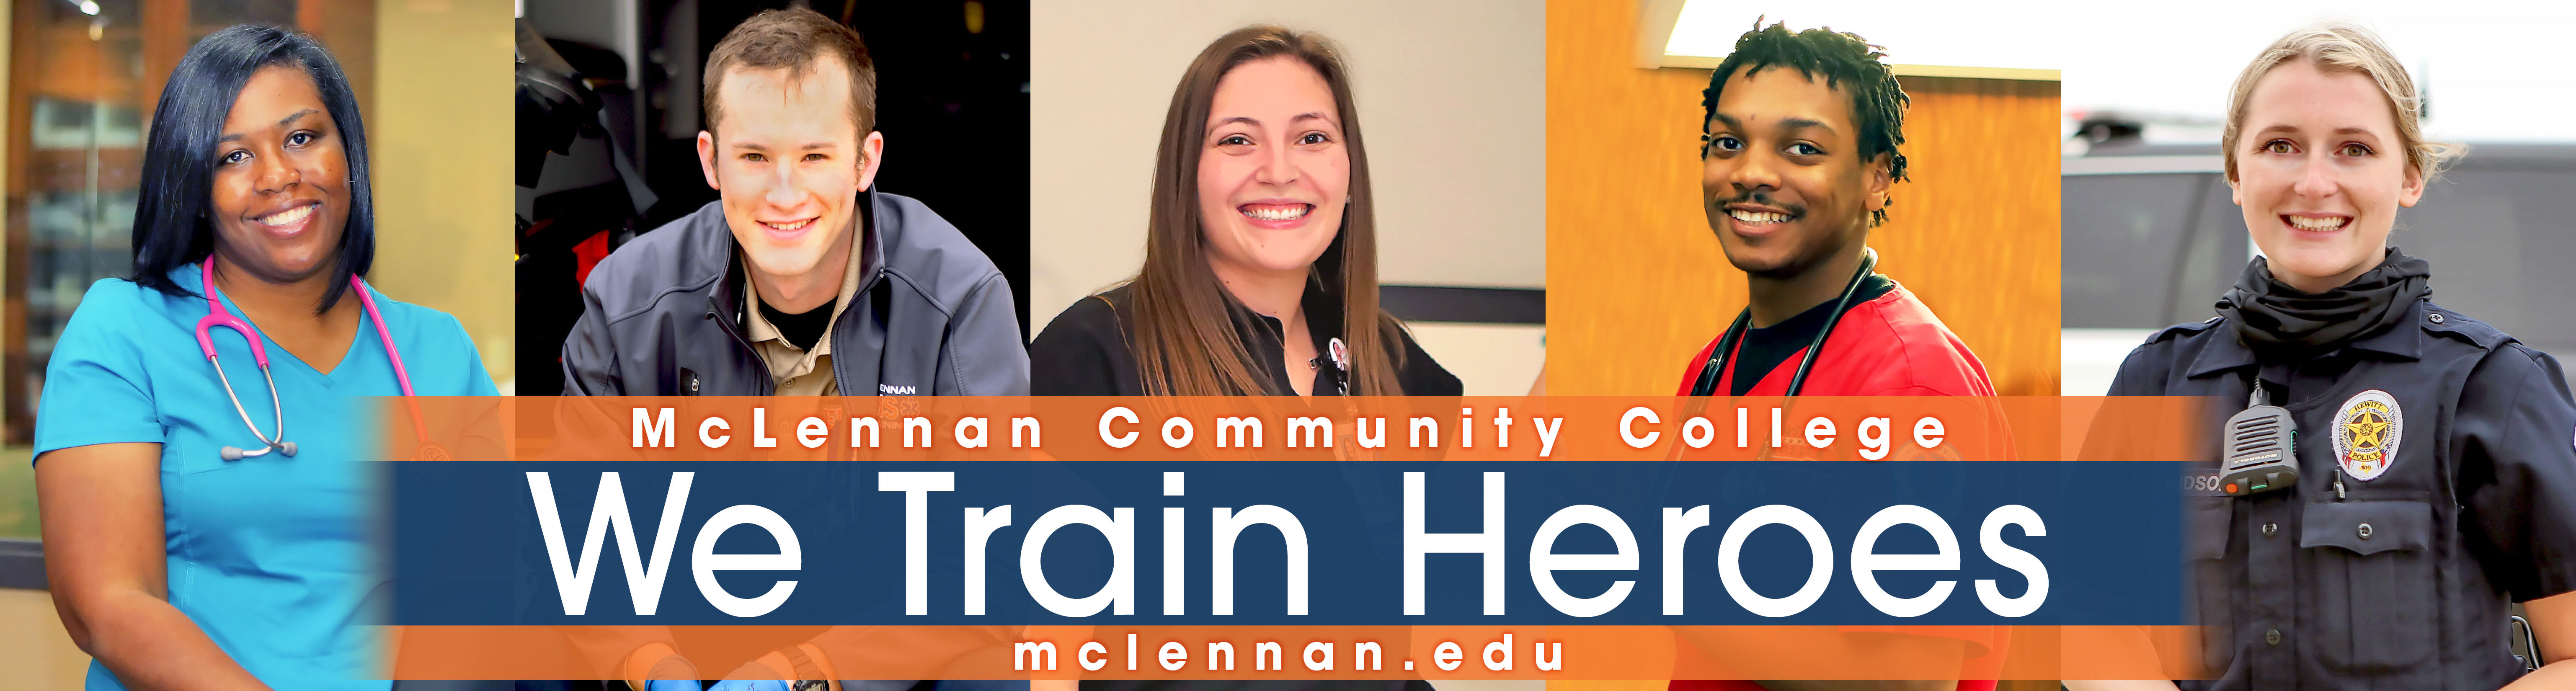 We train heroes at McLennan Community College